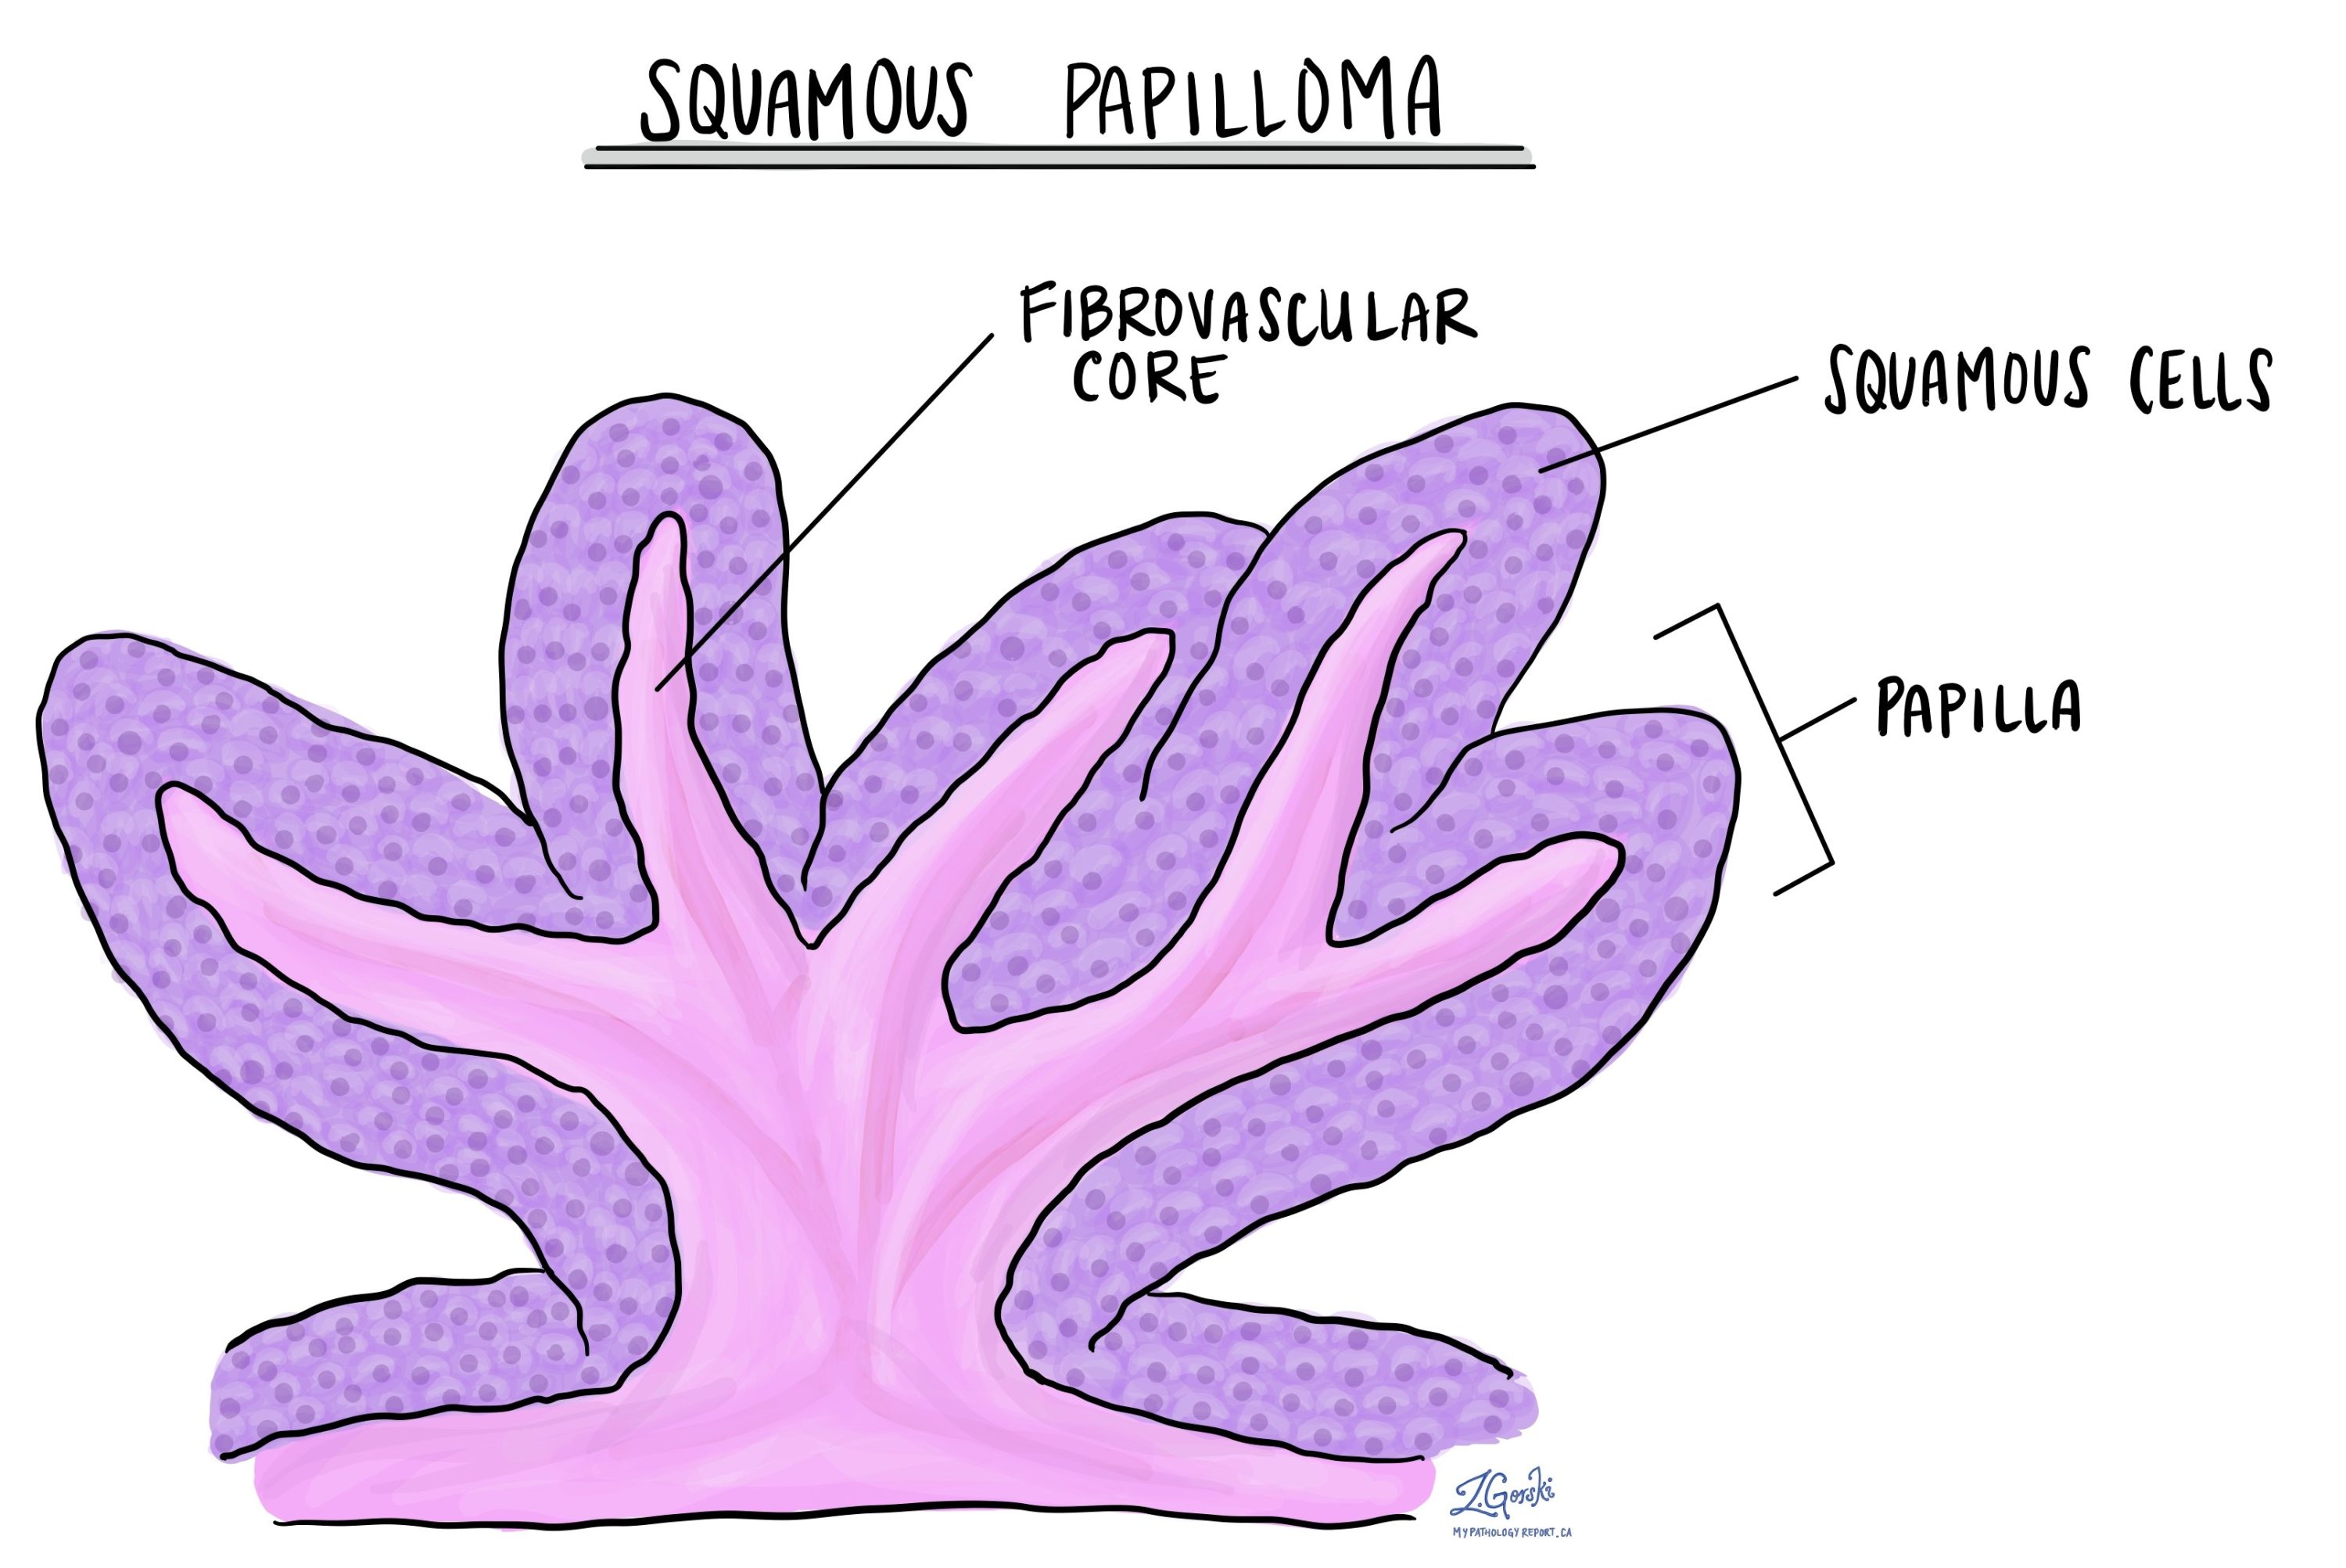 papillomatosis cancer definition